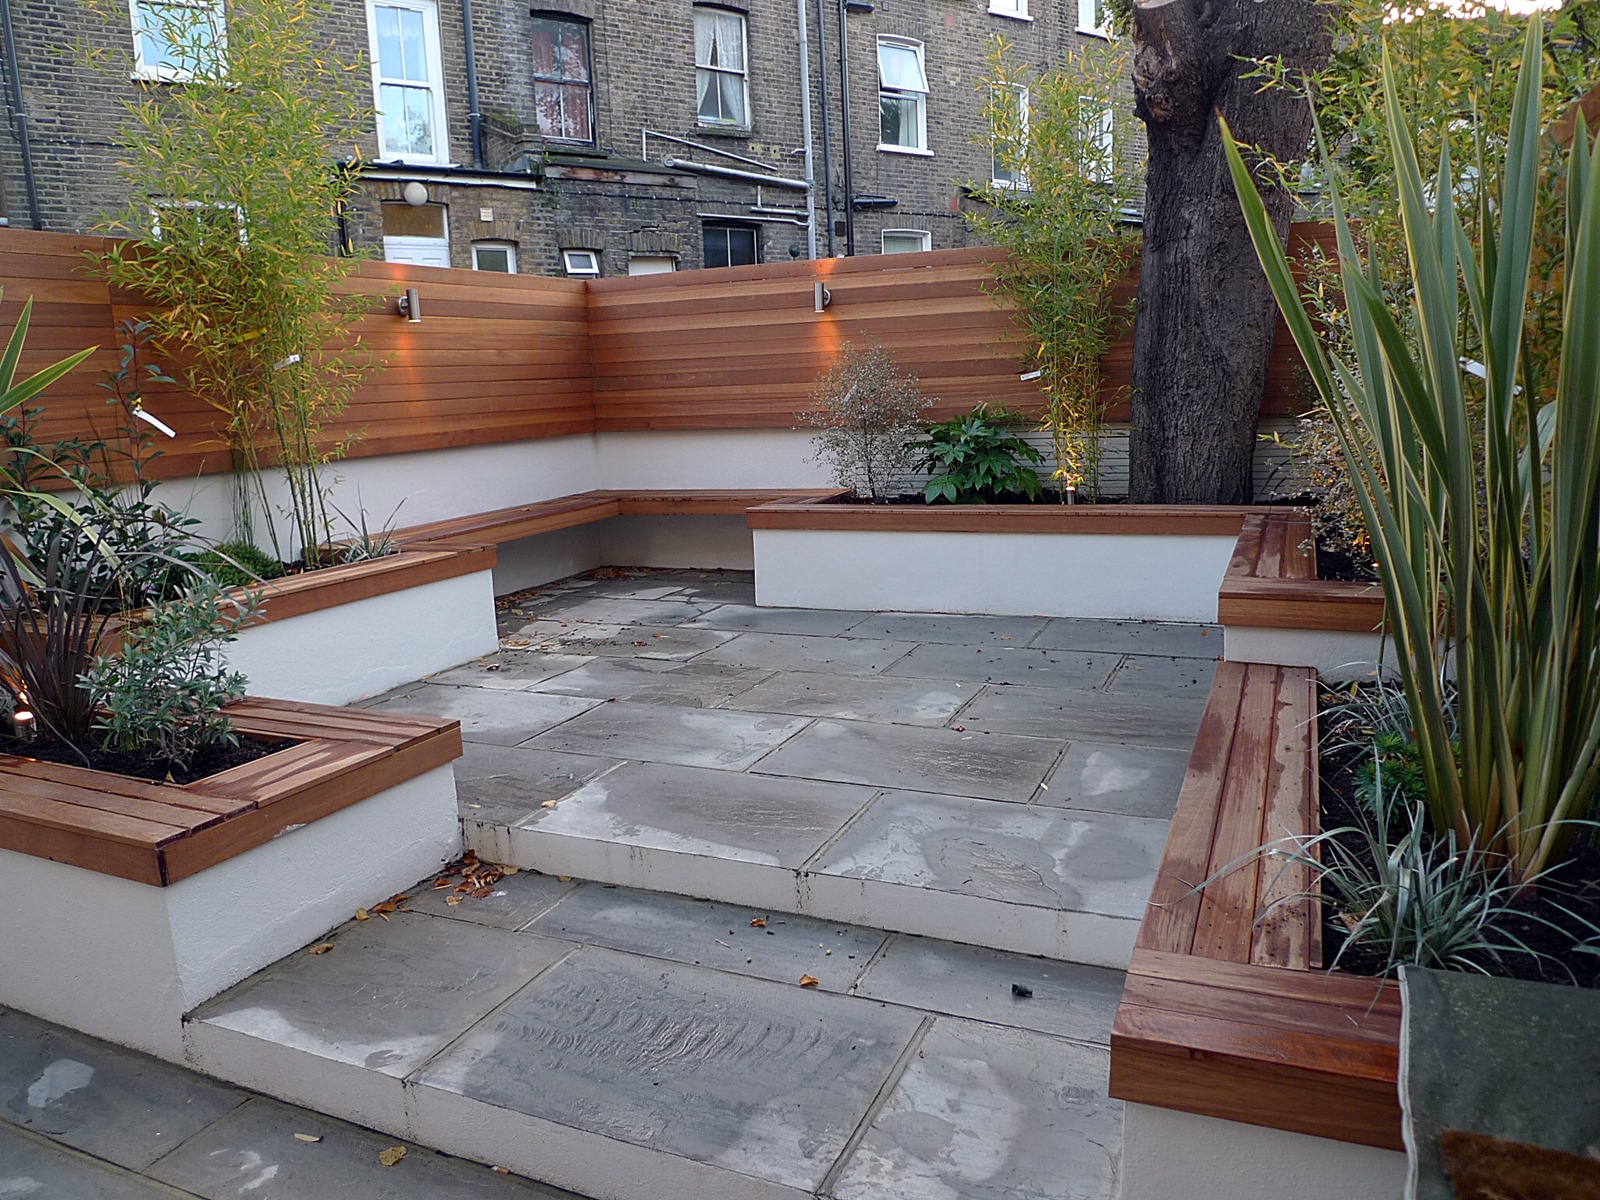 modern london courtyard low maintenance urban outdoor indoor living garden space paving screens planting bench raised beds (6)